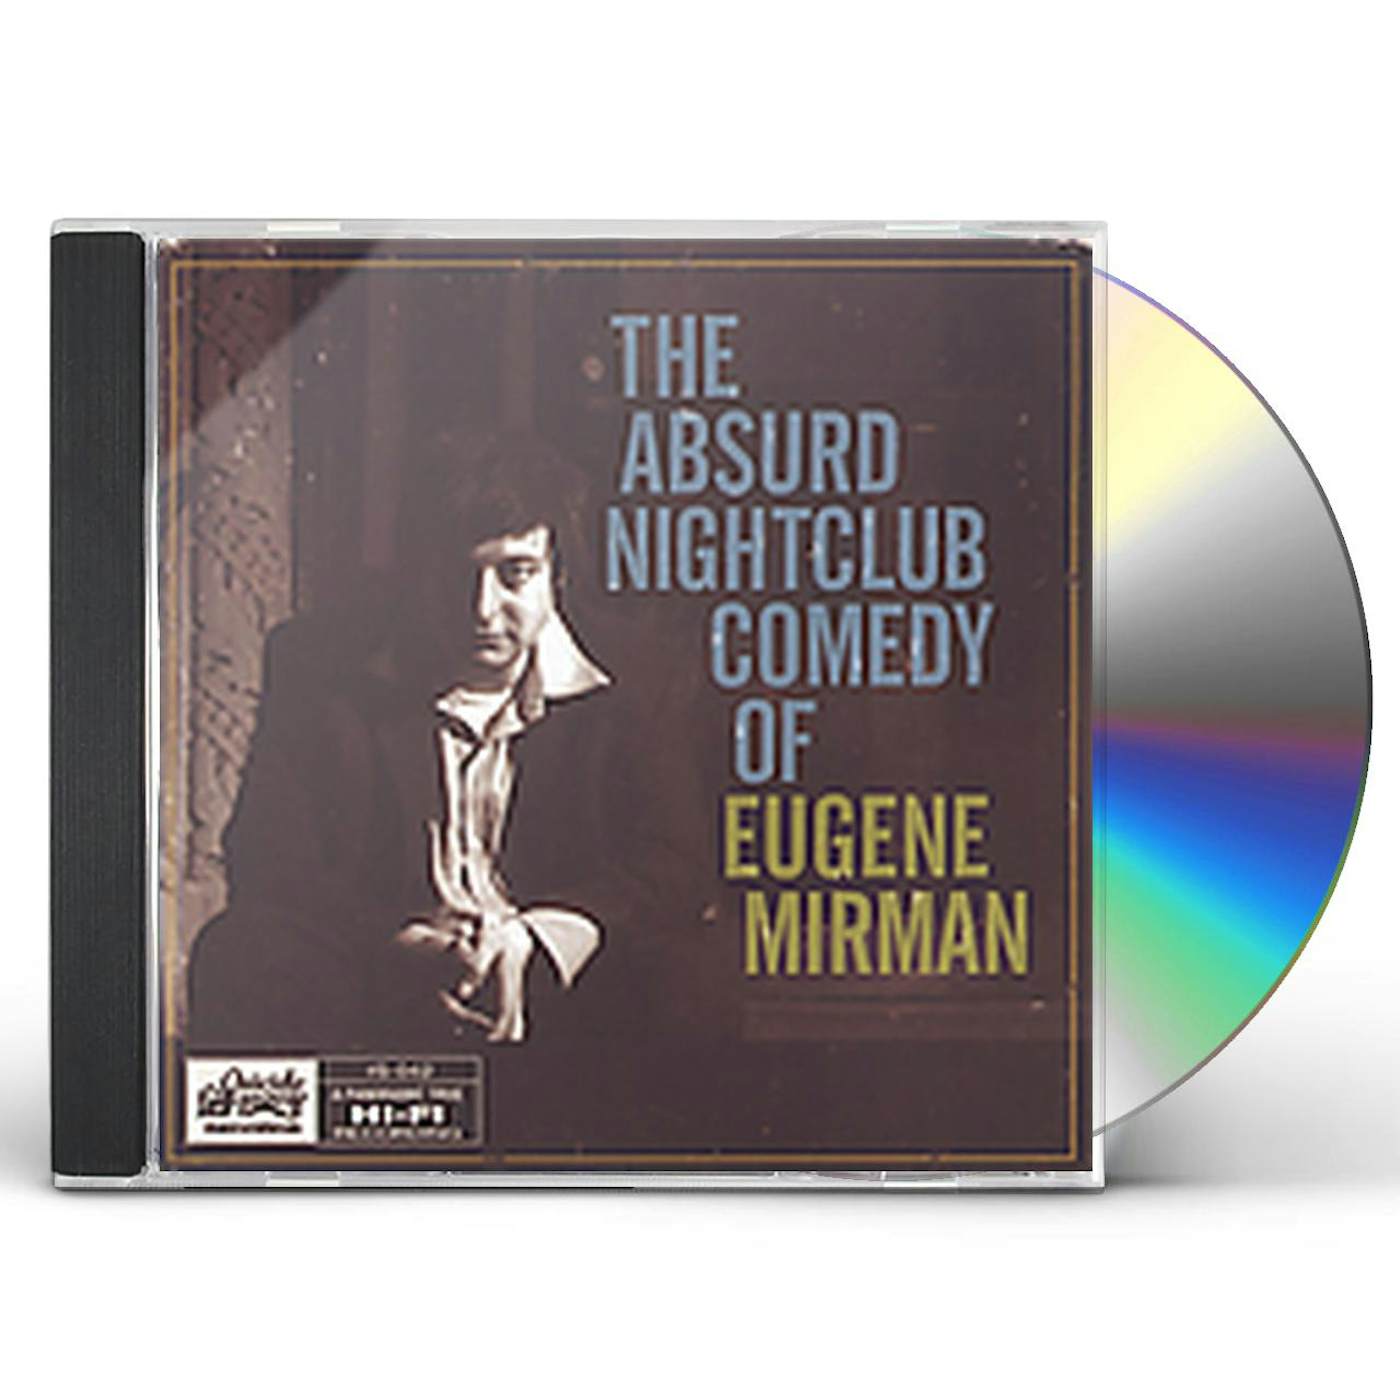 ABSURD NIGHTCLUB COMEDY OF EUGENE MIRMAN CD